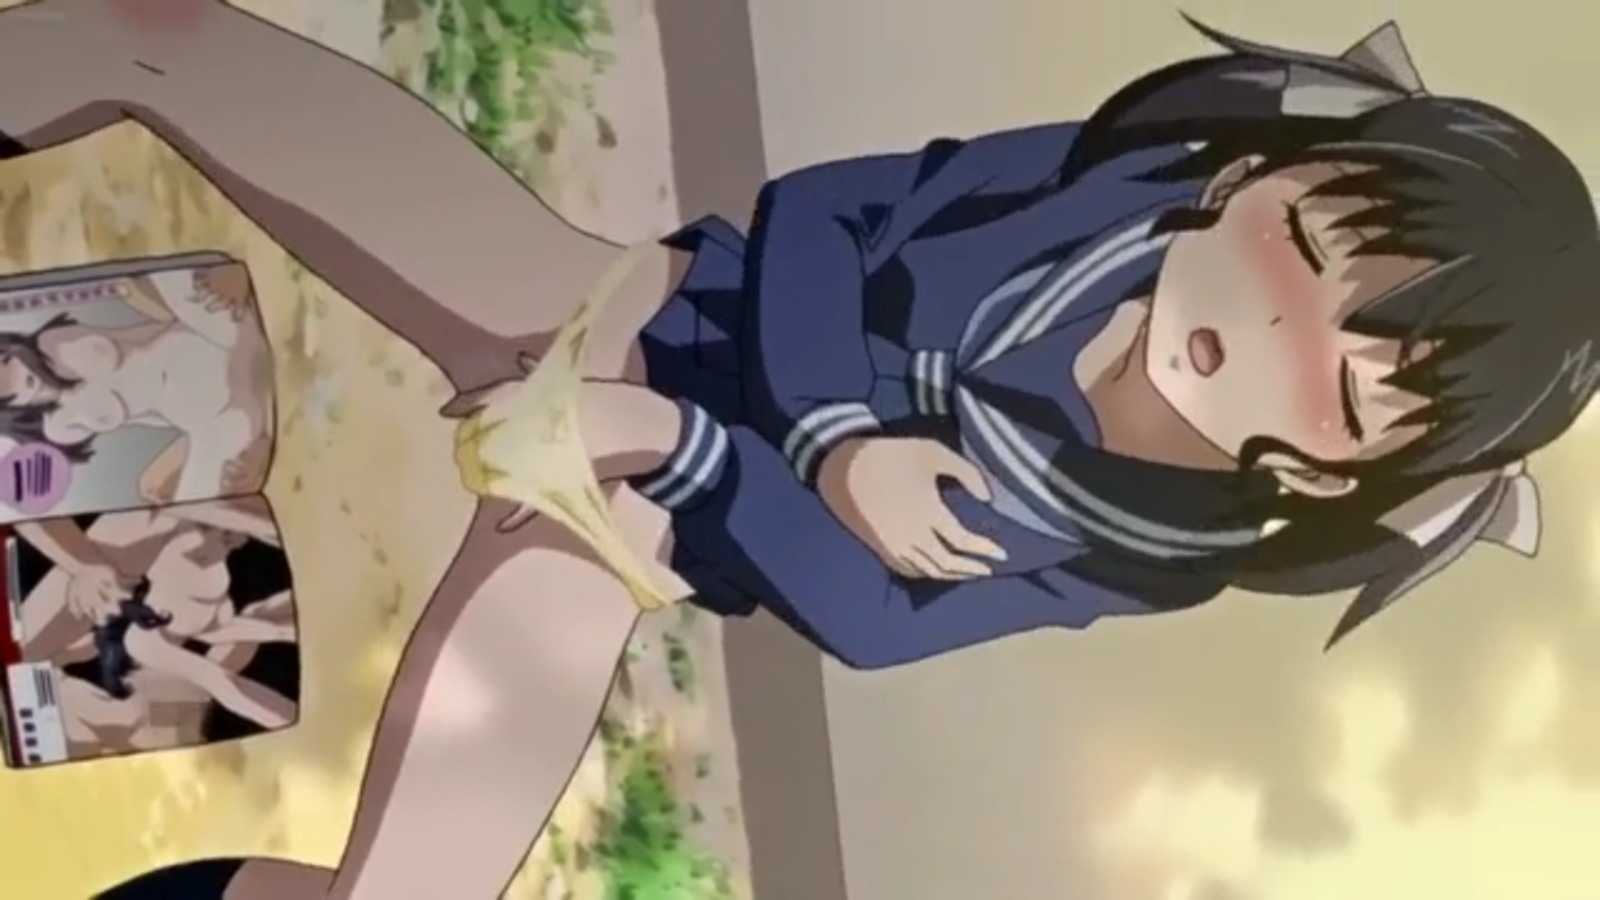 Hot Sexy Anime Girl Playing With Self